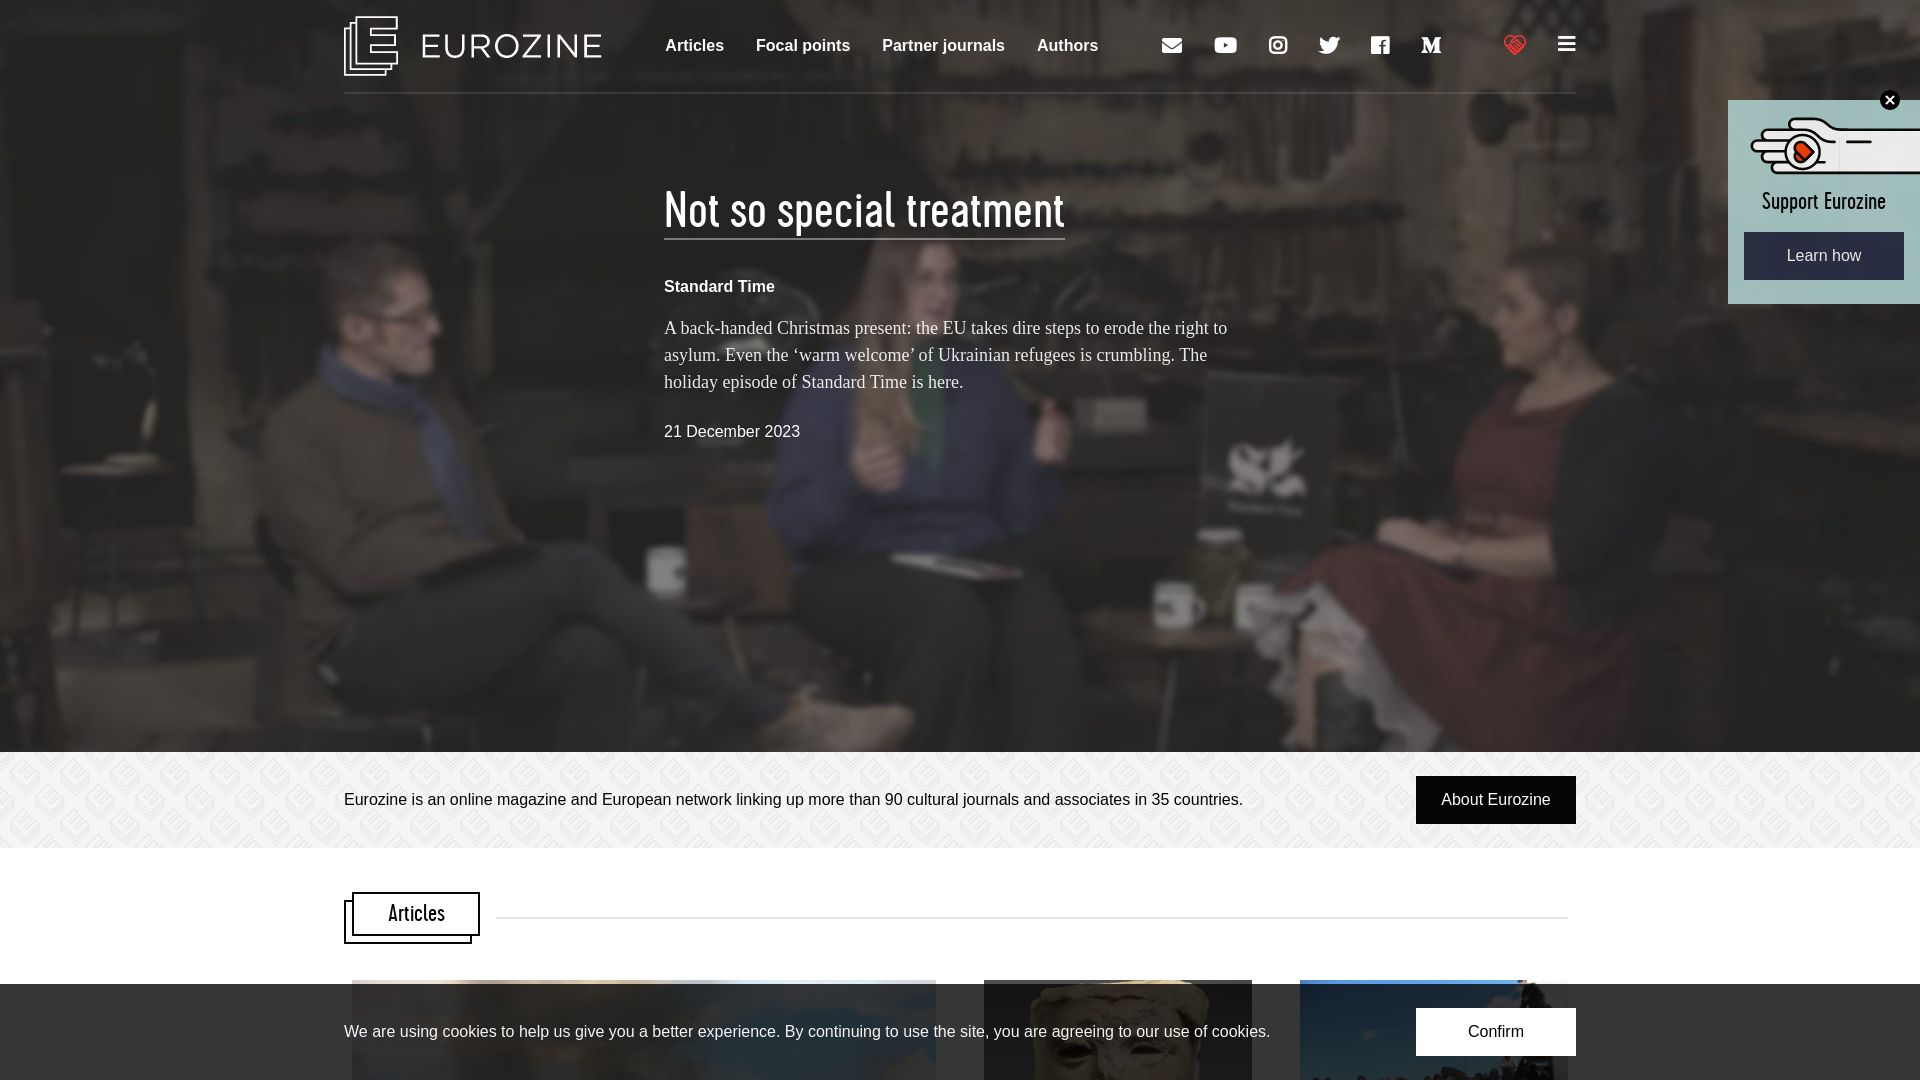 Website status eurozine.com is   ONLINE